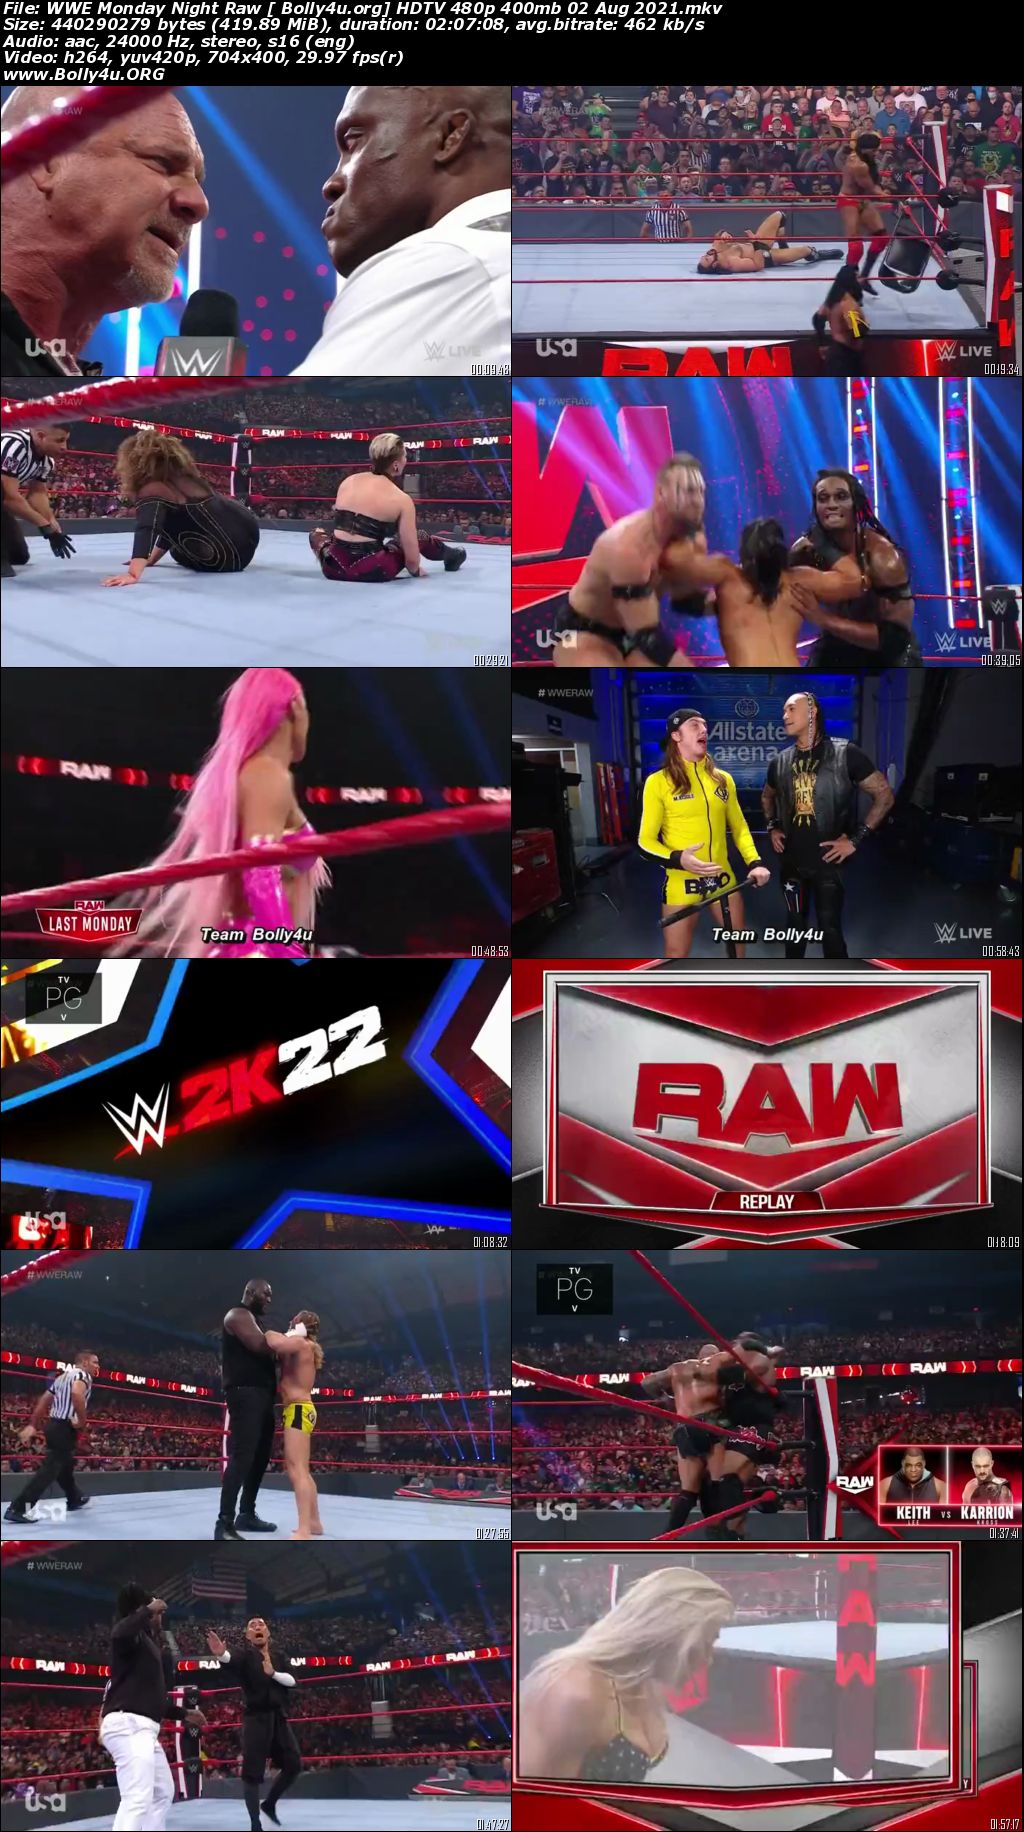 WWE Monday Night Raw HDTV 480p 400mb 02 Aug 2021 Download